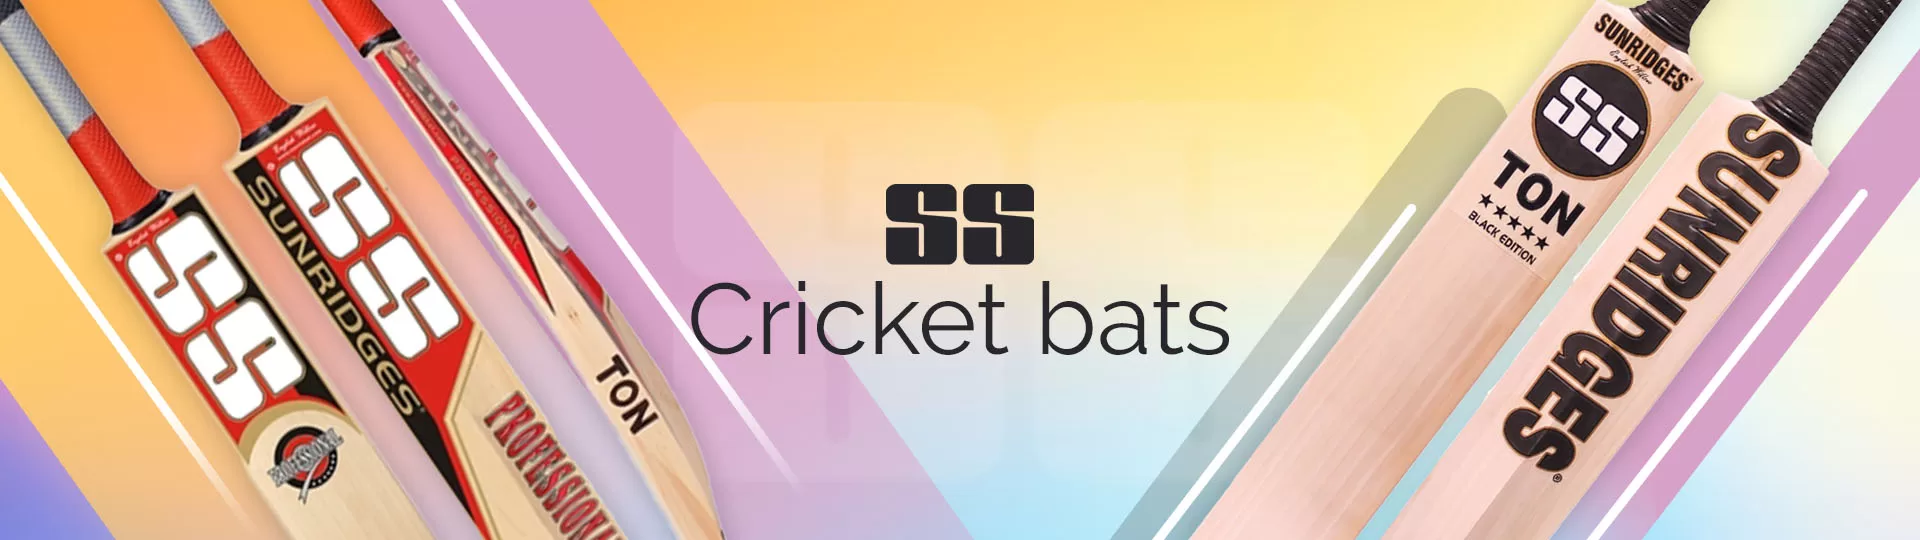 SS Cricket Bats